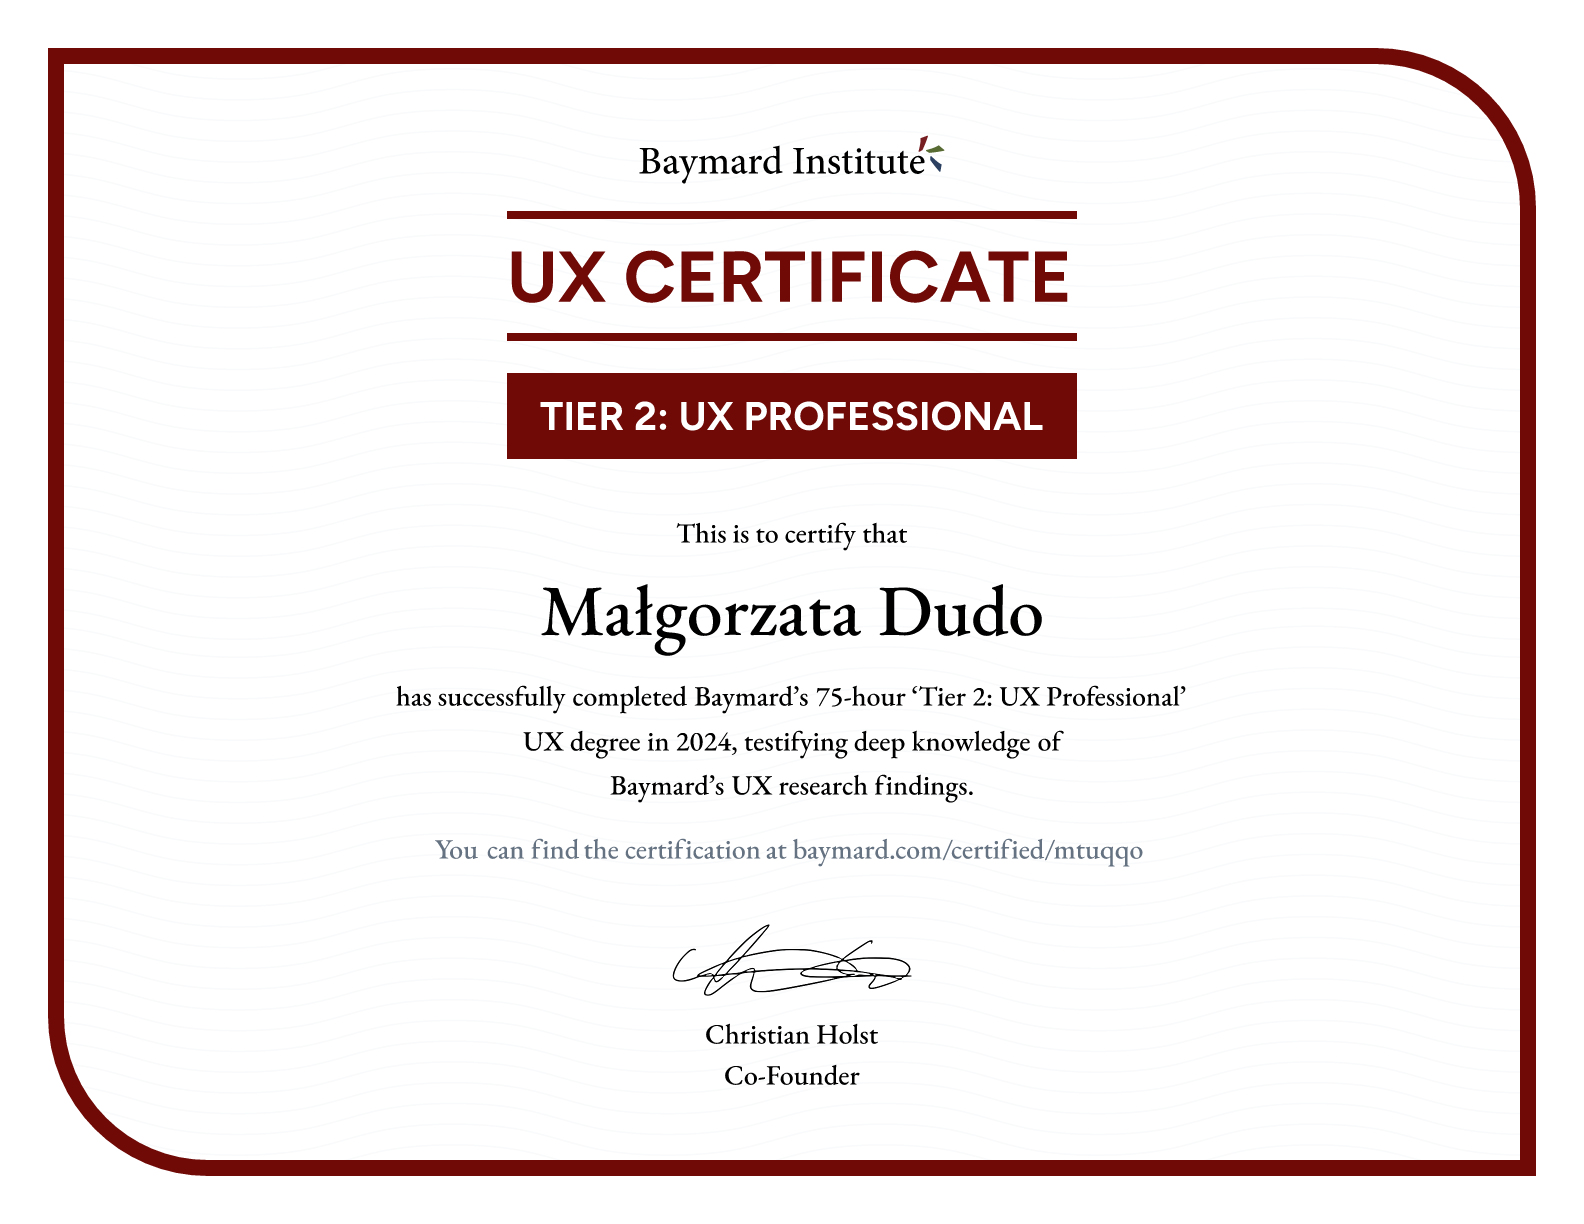 Małgorzata Dudo’s certificate